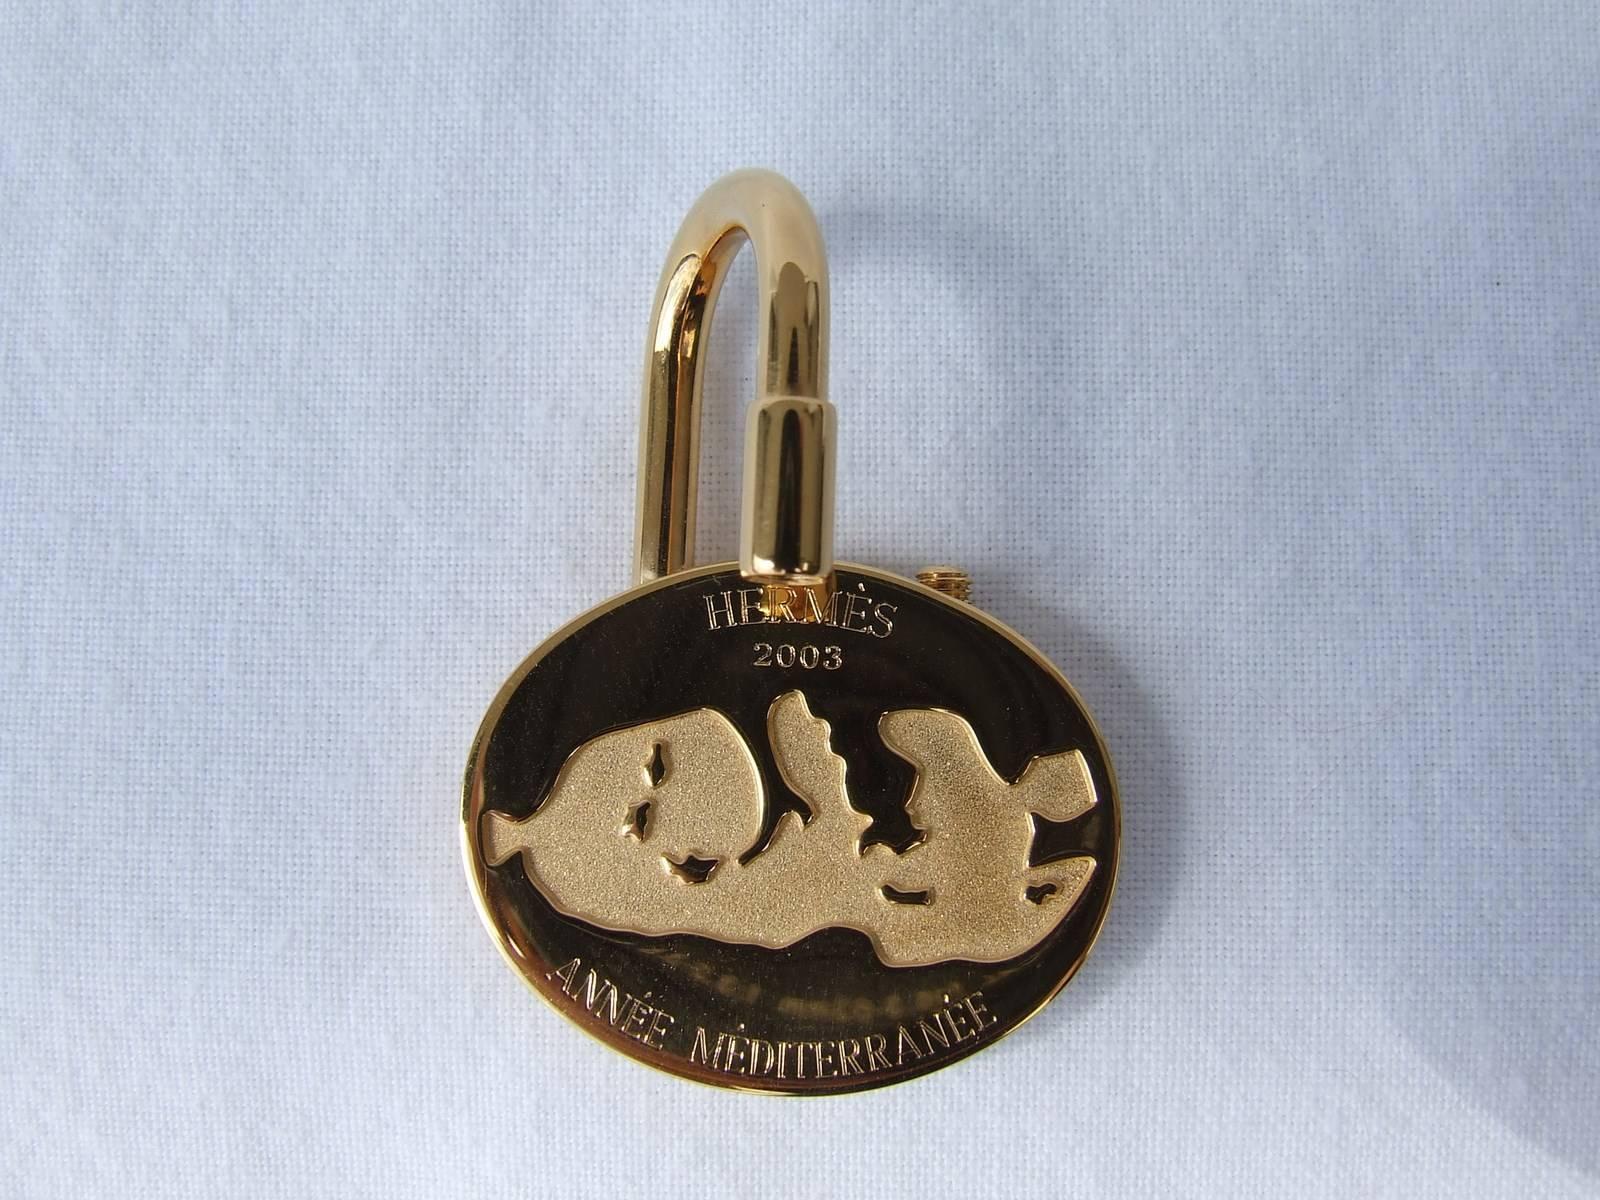 Hermès Golden Padlock Key Ring Key Holder 2003 Year of the Mediterranee 2